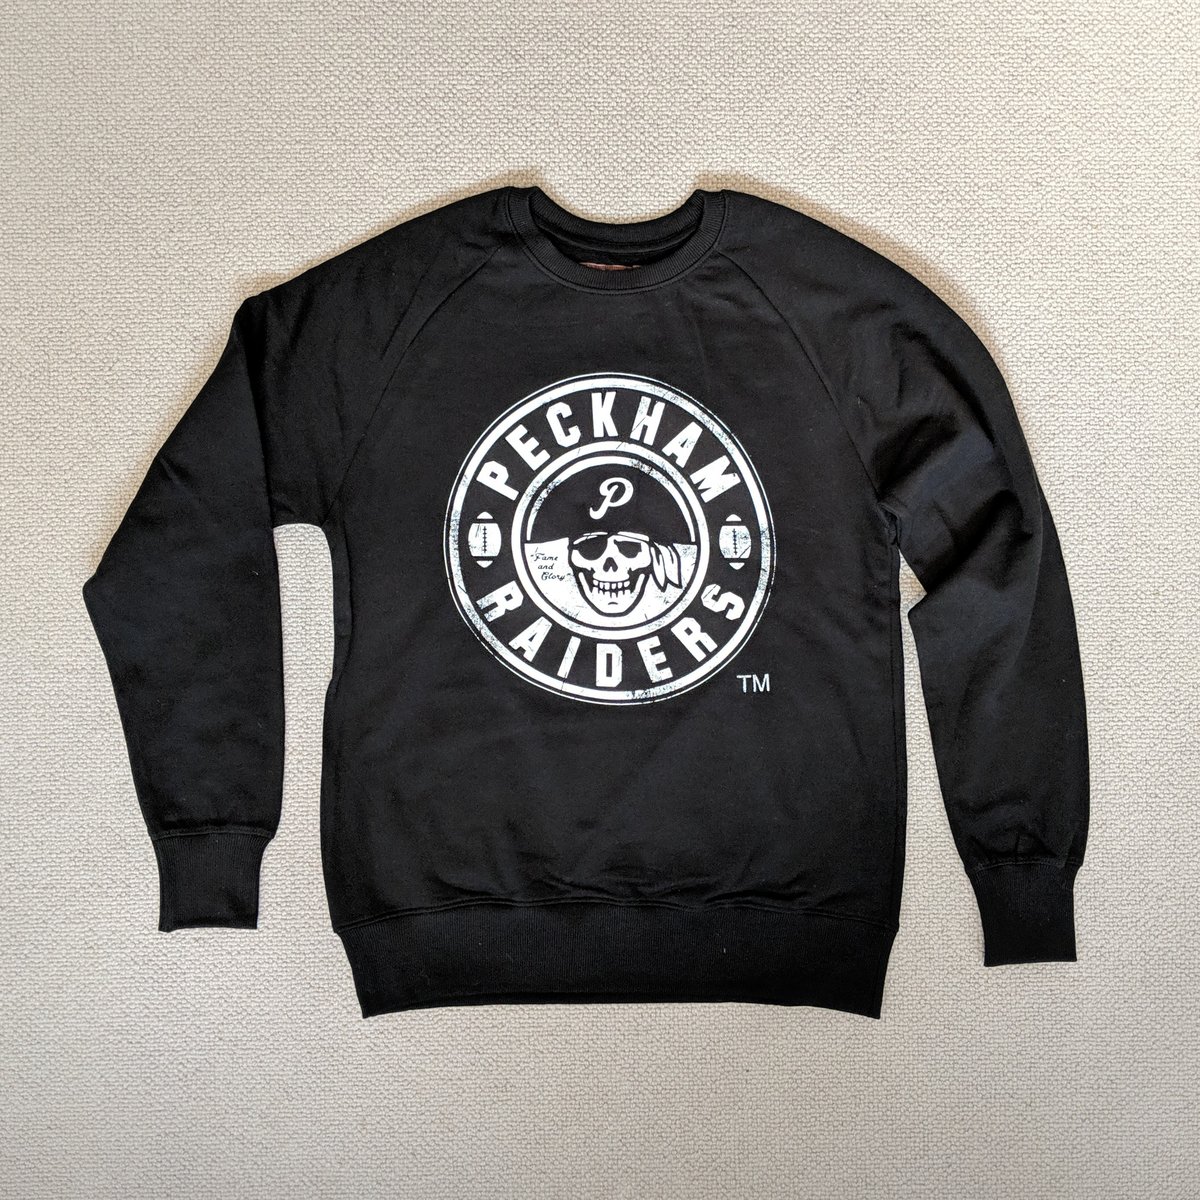 Image of Peckham Raiders - Black Sweater